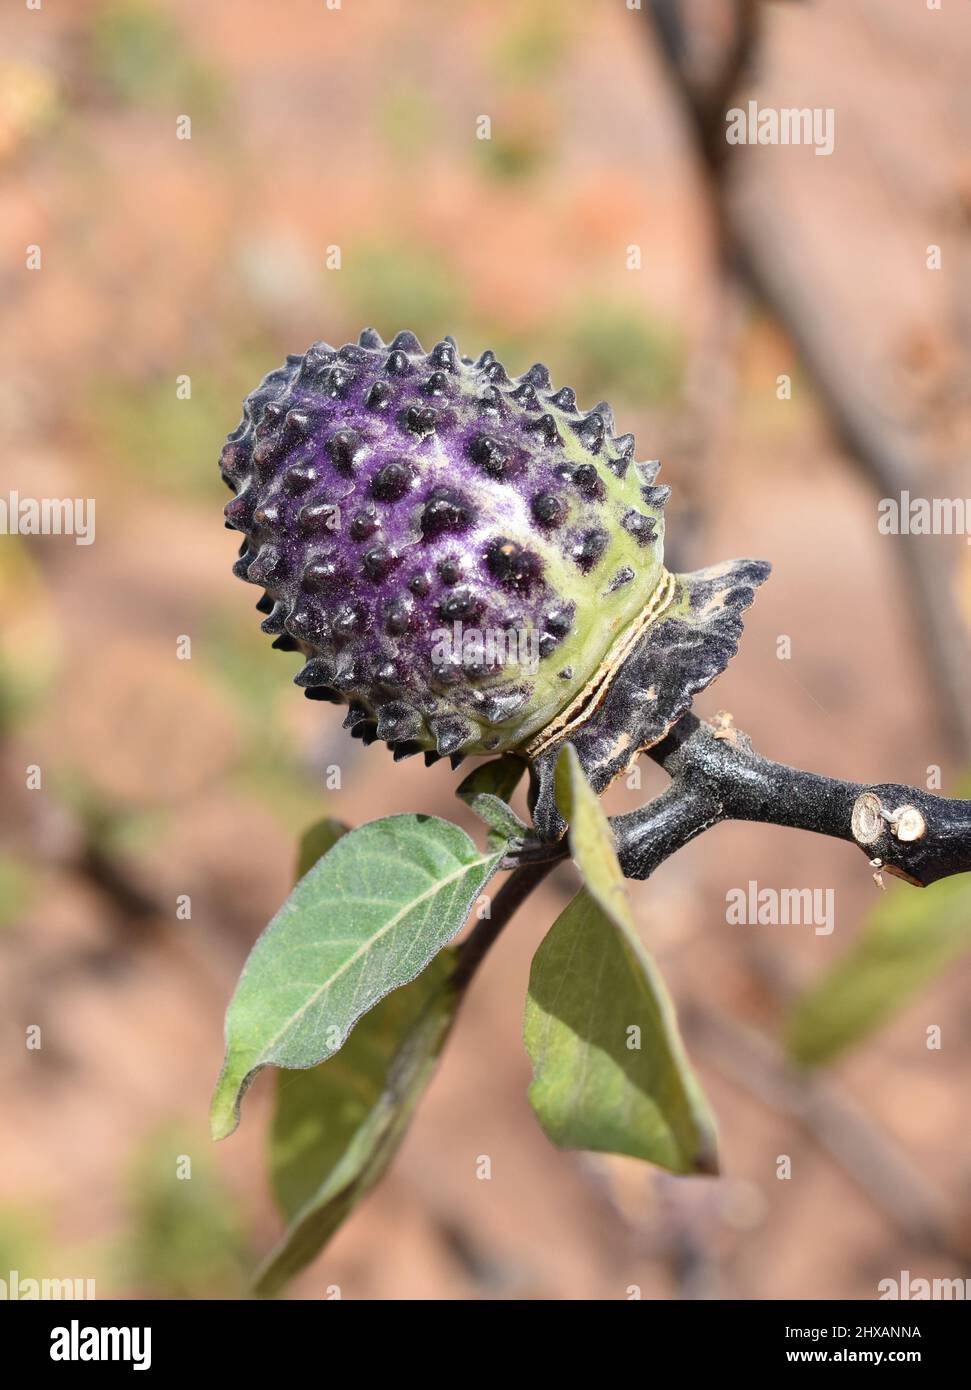 The tuberculate purple toxic hallucinogen seed pod of Devil's Trumpet plant Datura metel Stock Photo